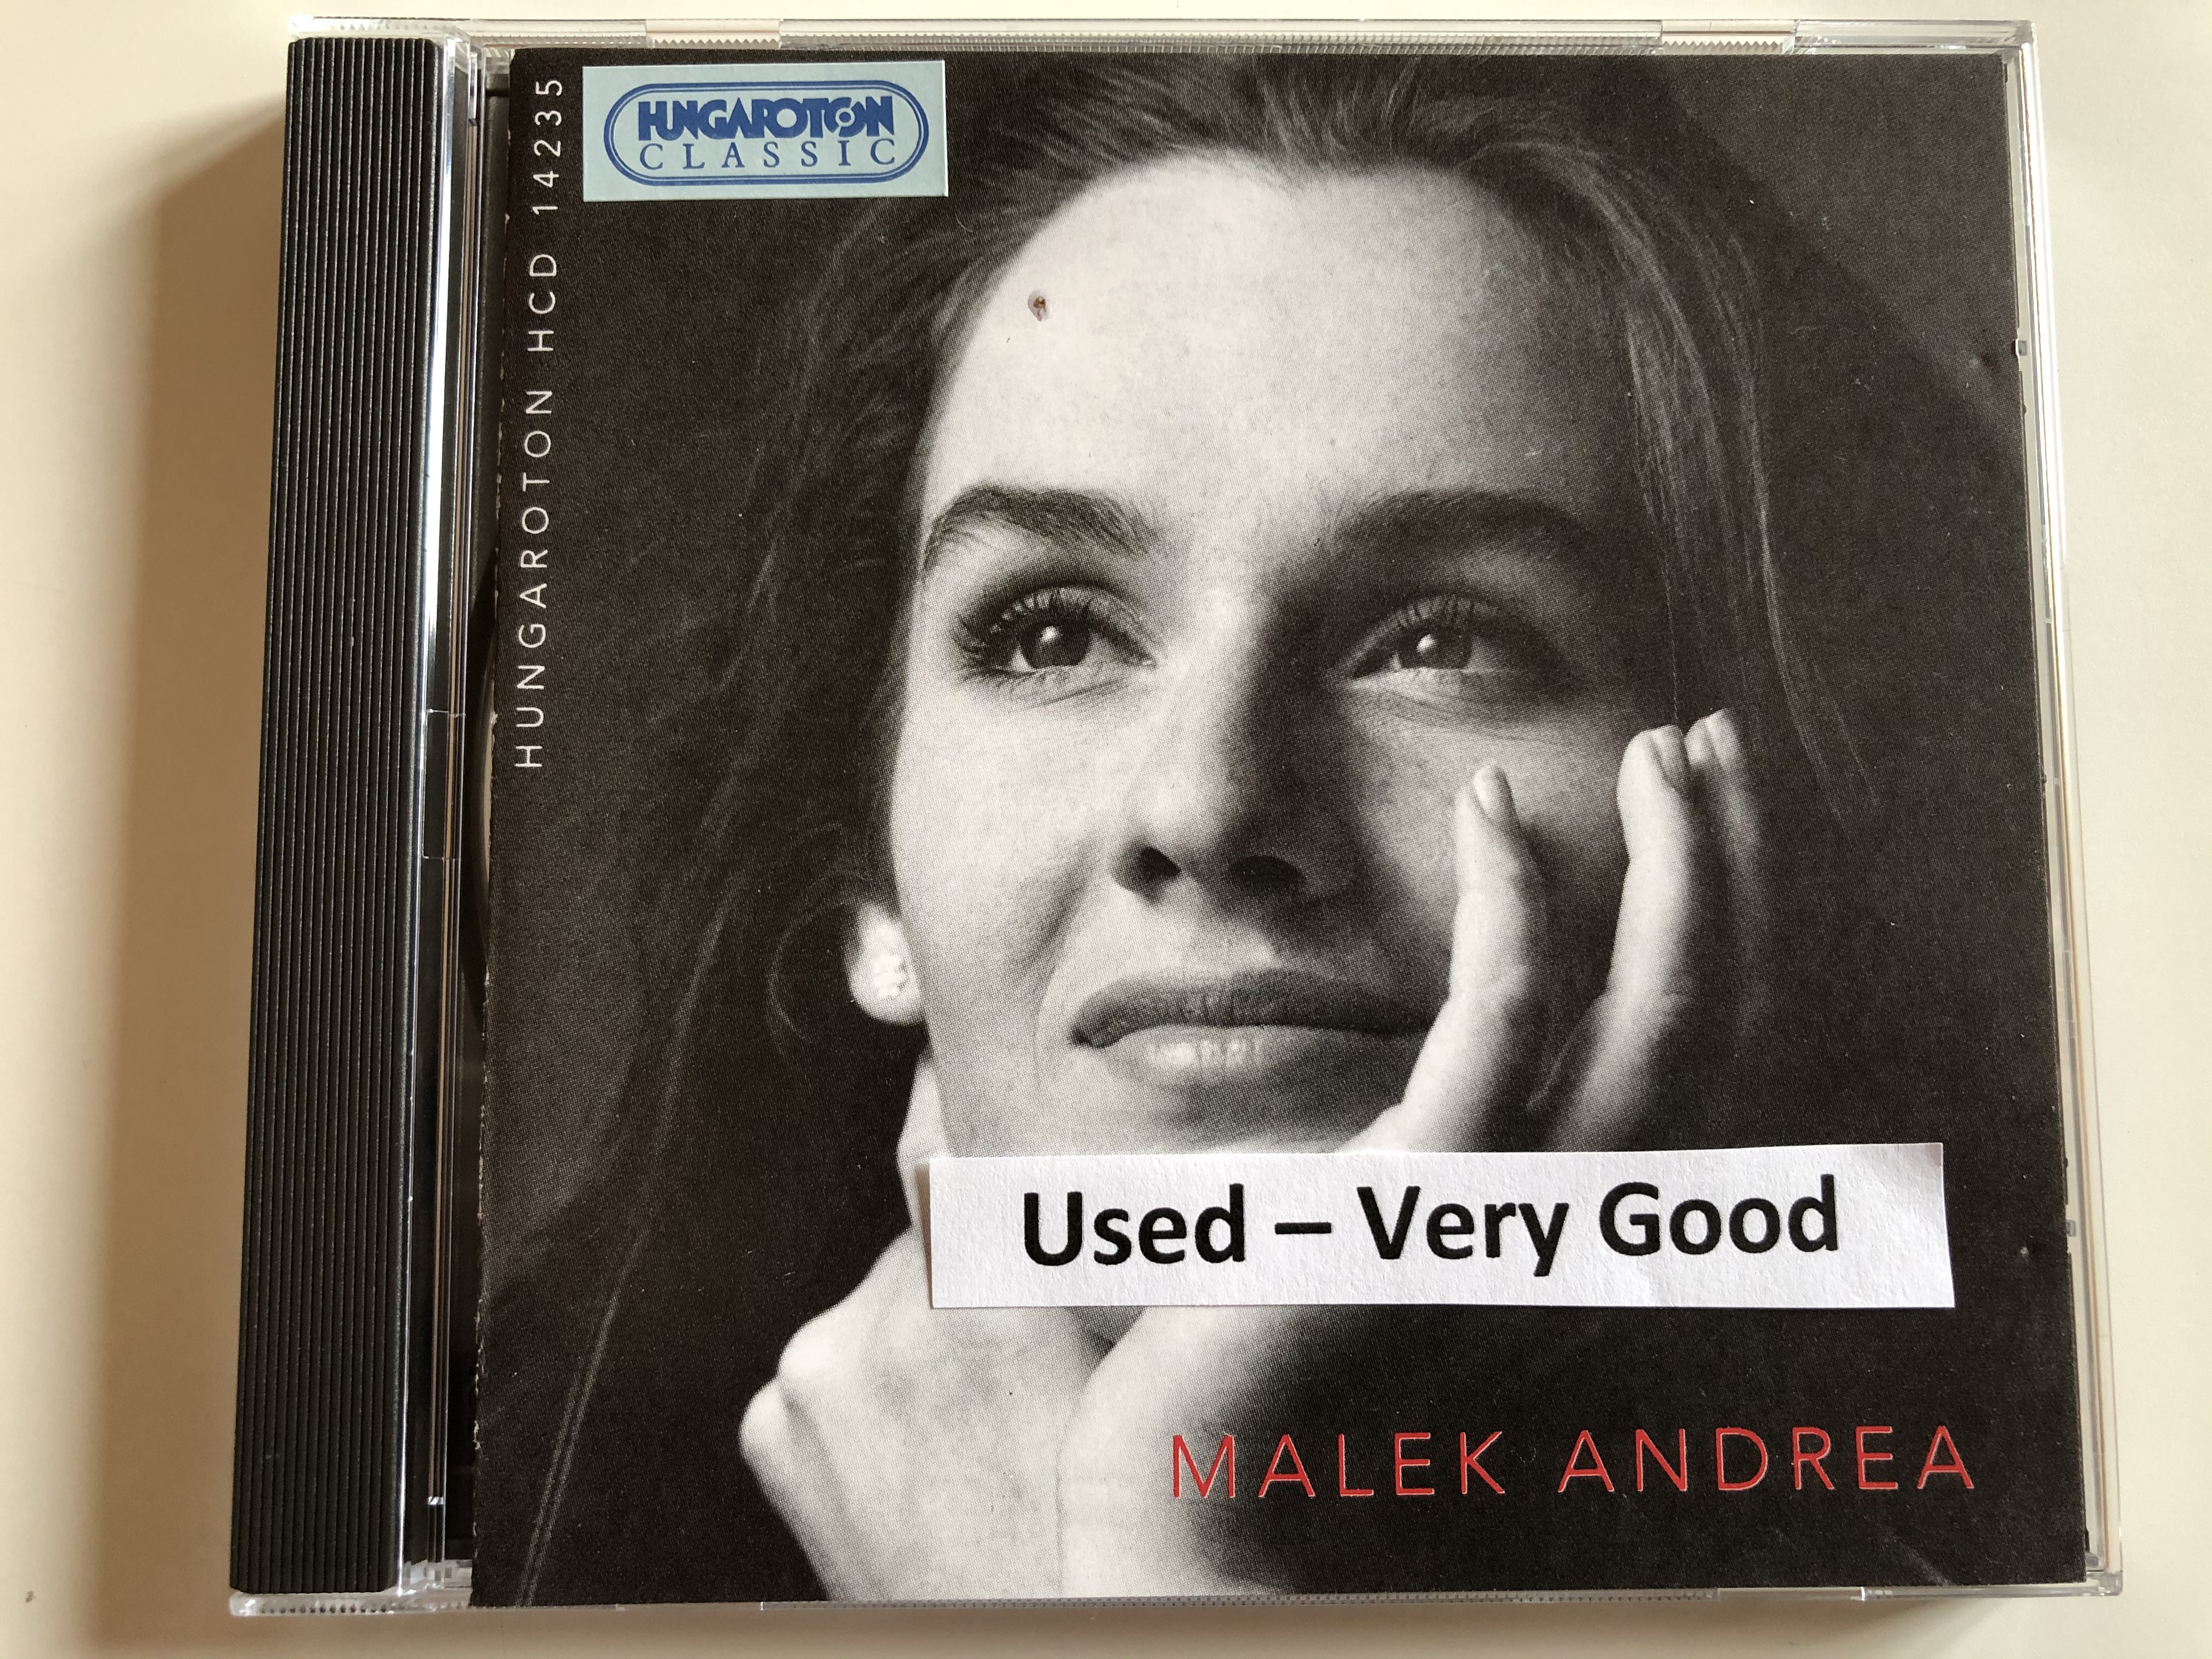 malek-andrea-hungaroton-classic-audio-cd-1994-stereo-hcd-14235-1-.jpg